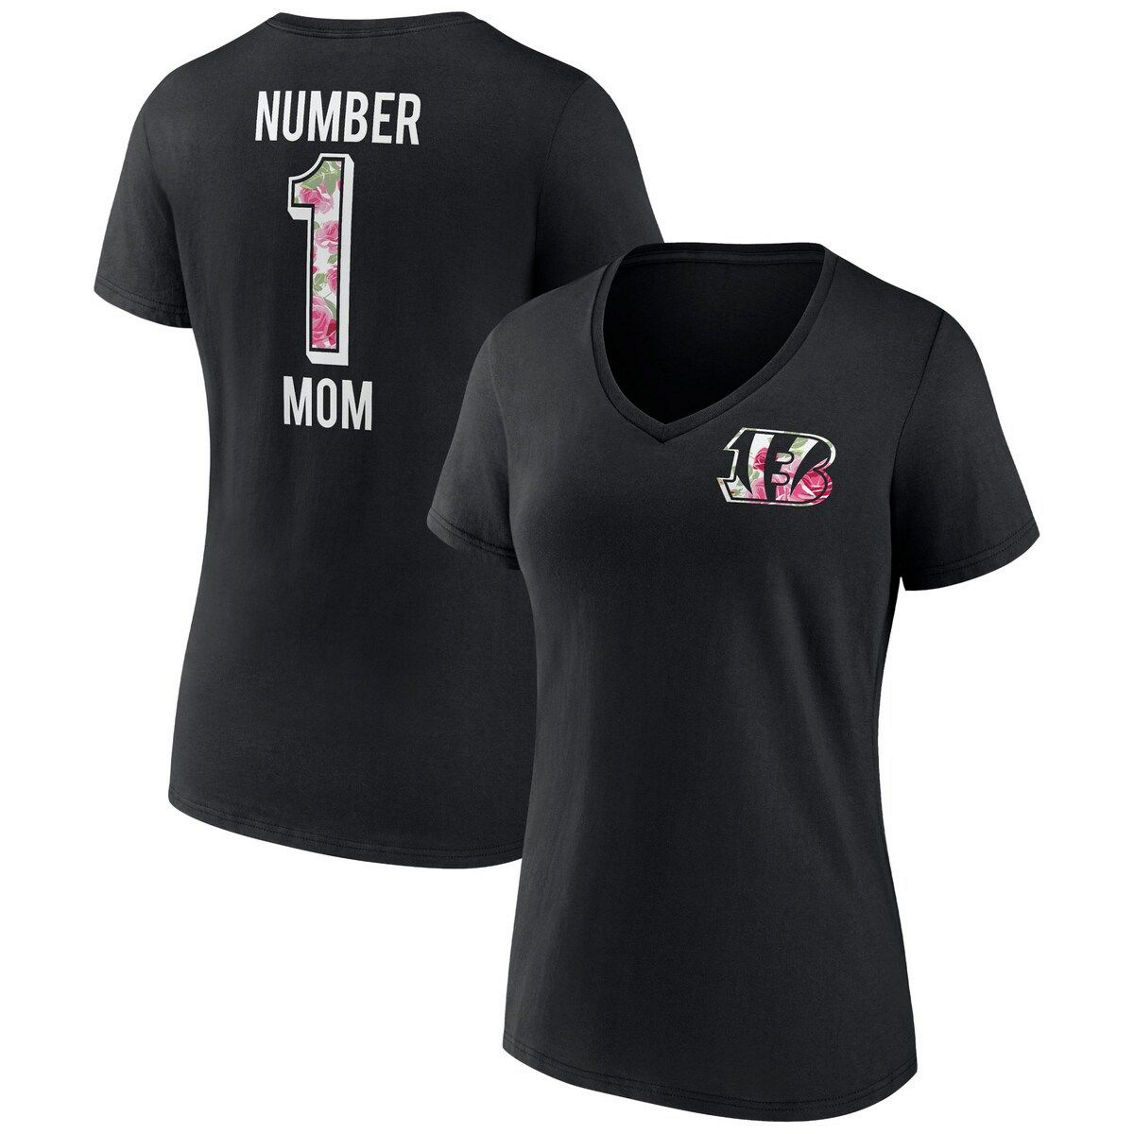 Fanatics Branded Women's Black Cincinnati Bengals Plus Size Mother's Day #1 Mom V-Neck T-Shirt - Image 2 of 4